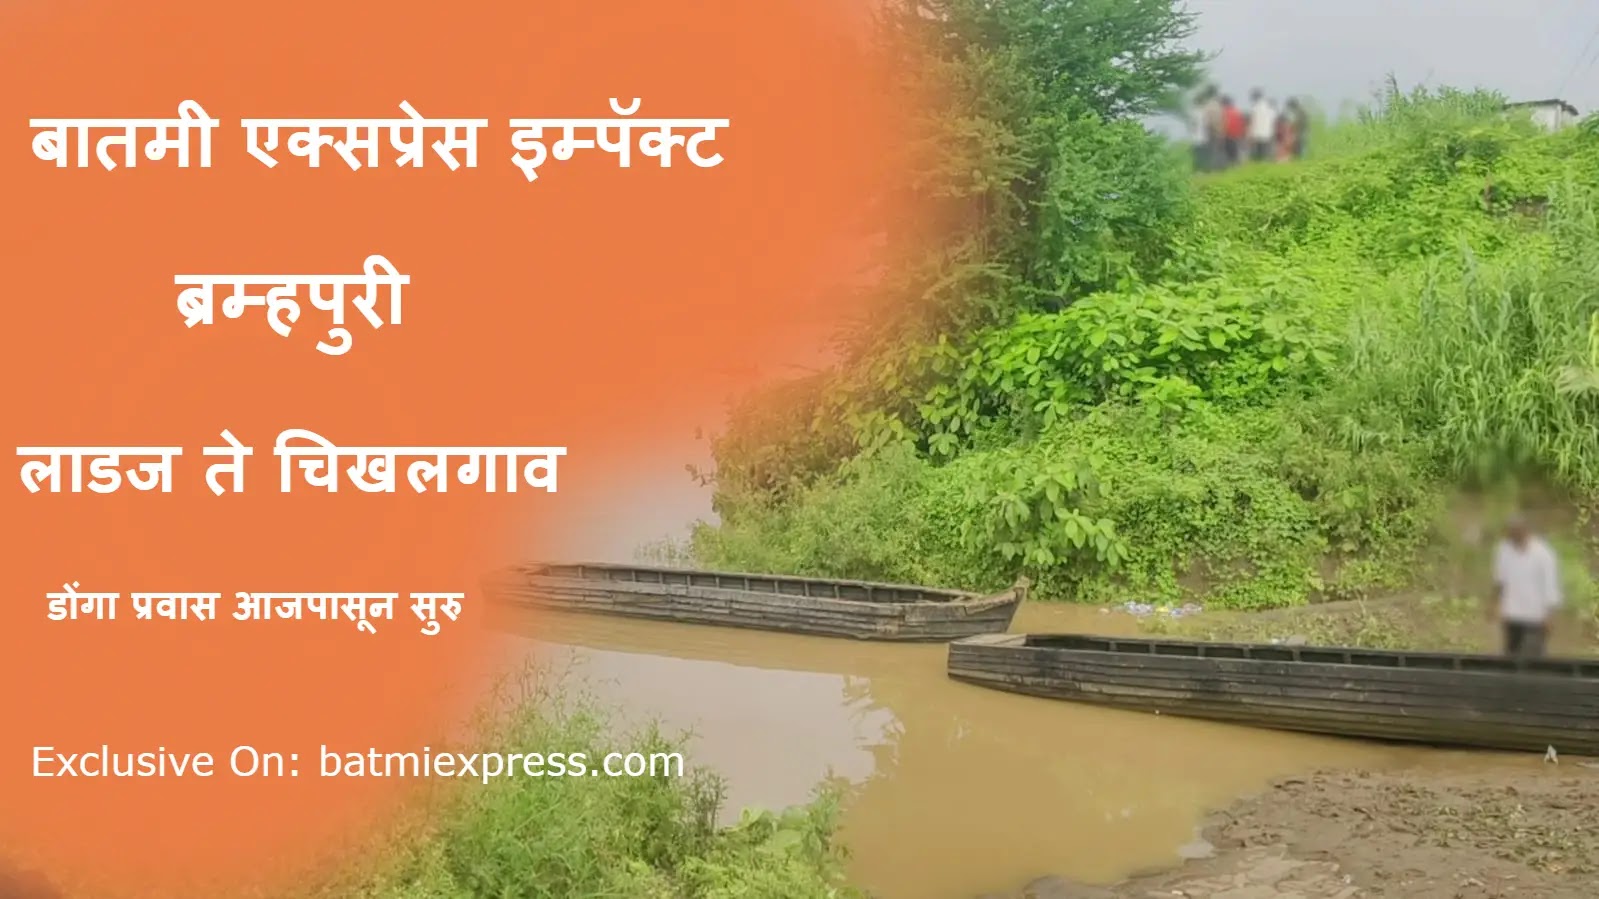 Chandraapur,Ladaj,Bramhapuri,Bramhapuri Live,Chandrapur Live,Chandrapur Flood,Goshikhurd,Gosikhurd,Chandrapur Flood 2022,Gosikhurd Flood Live,Gosikhurd Flood Live 2022,Bramhapuri News,